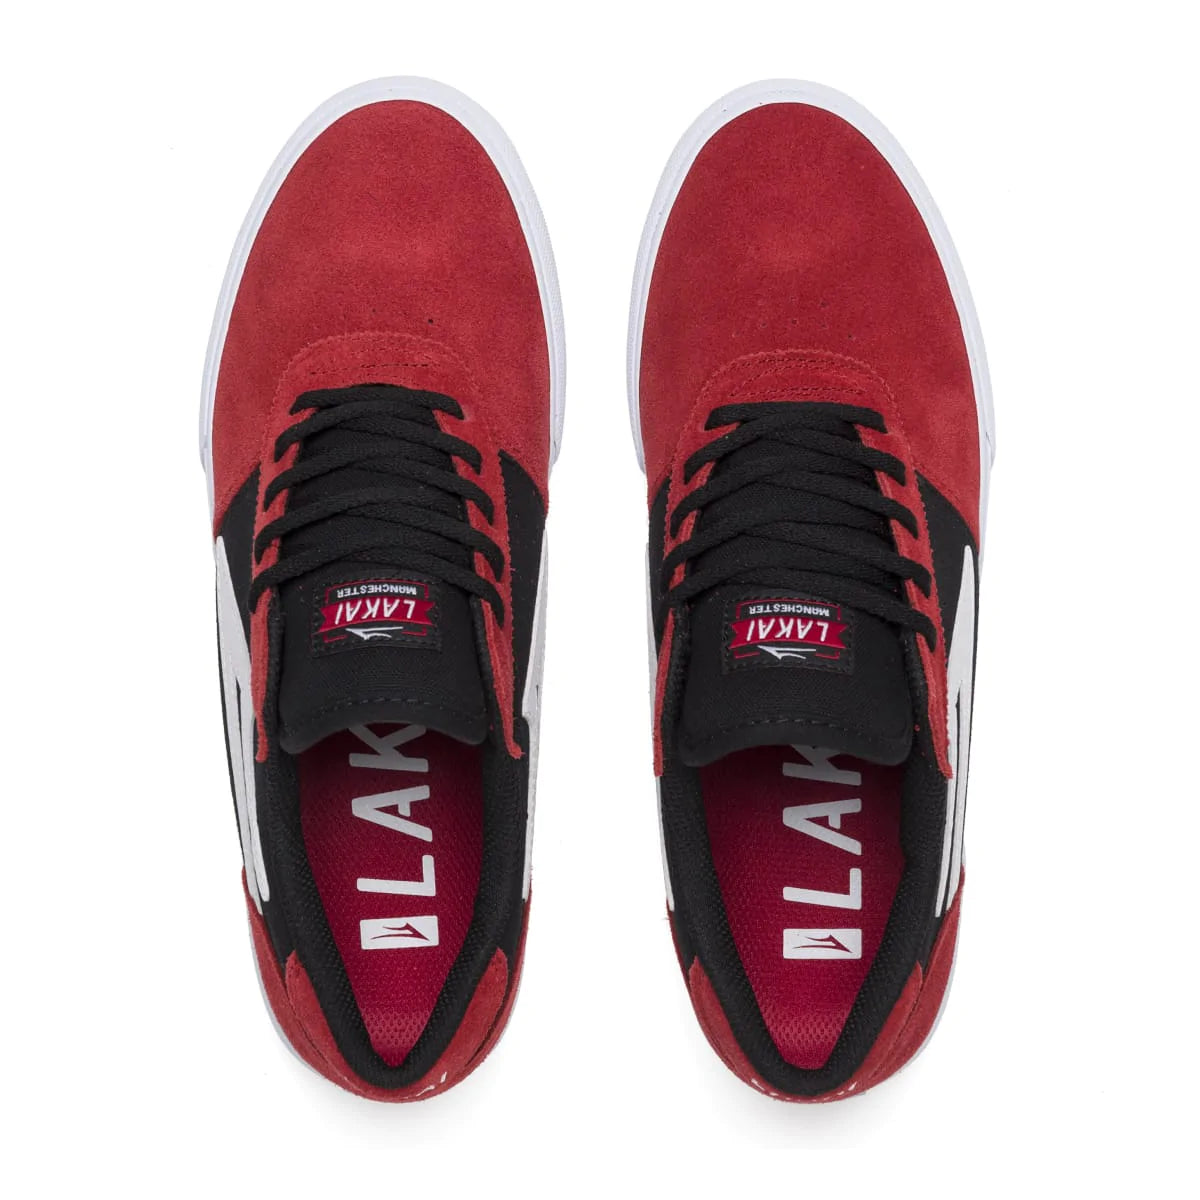 Chaussures de skate Lakai Manchester - Rouge/Noir 